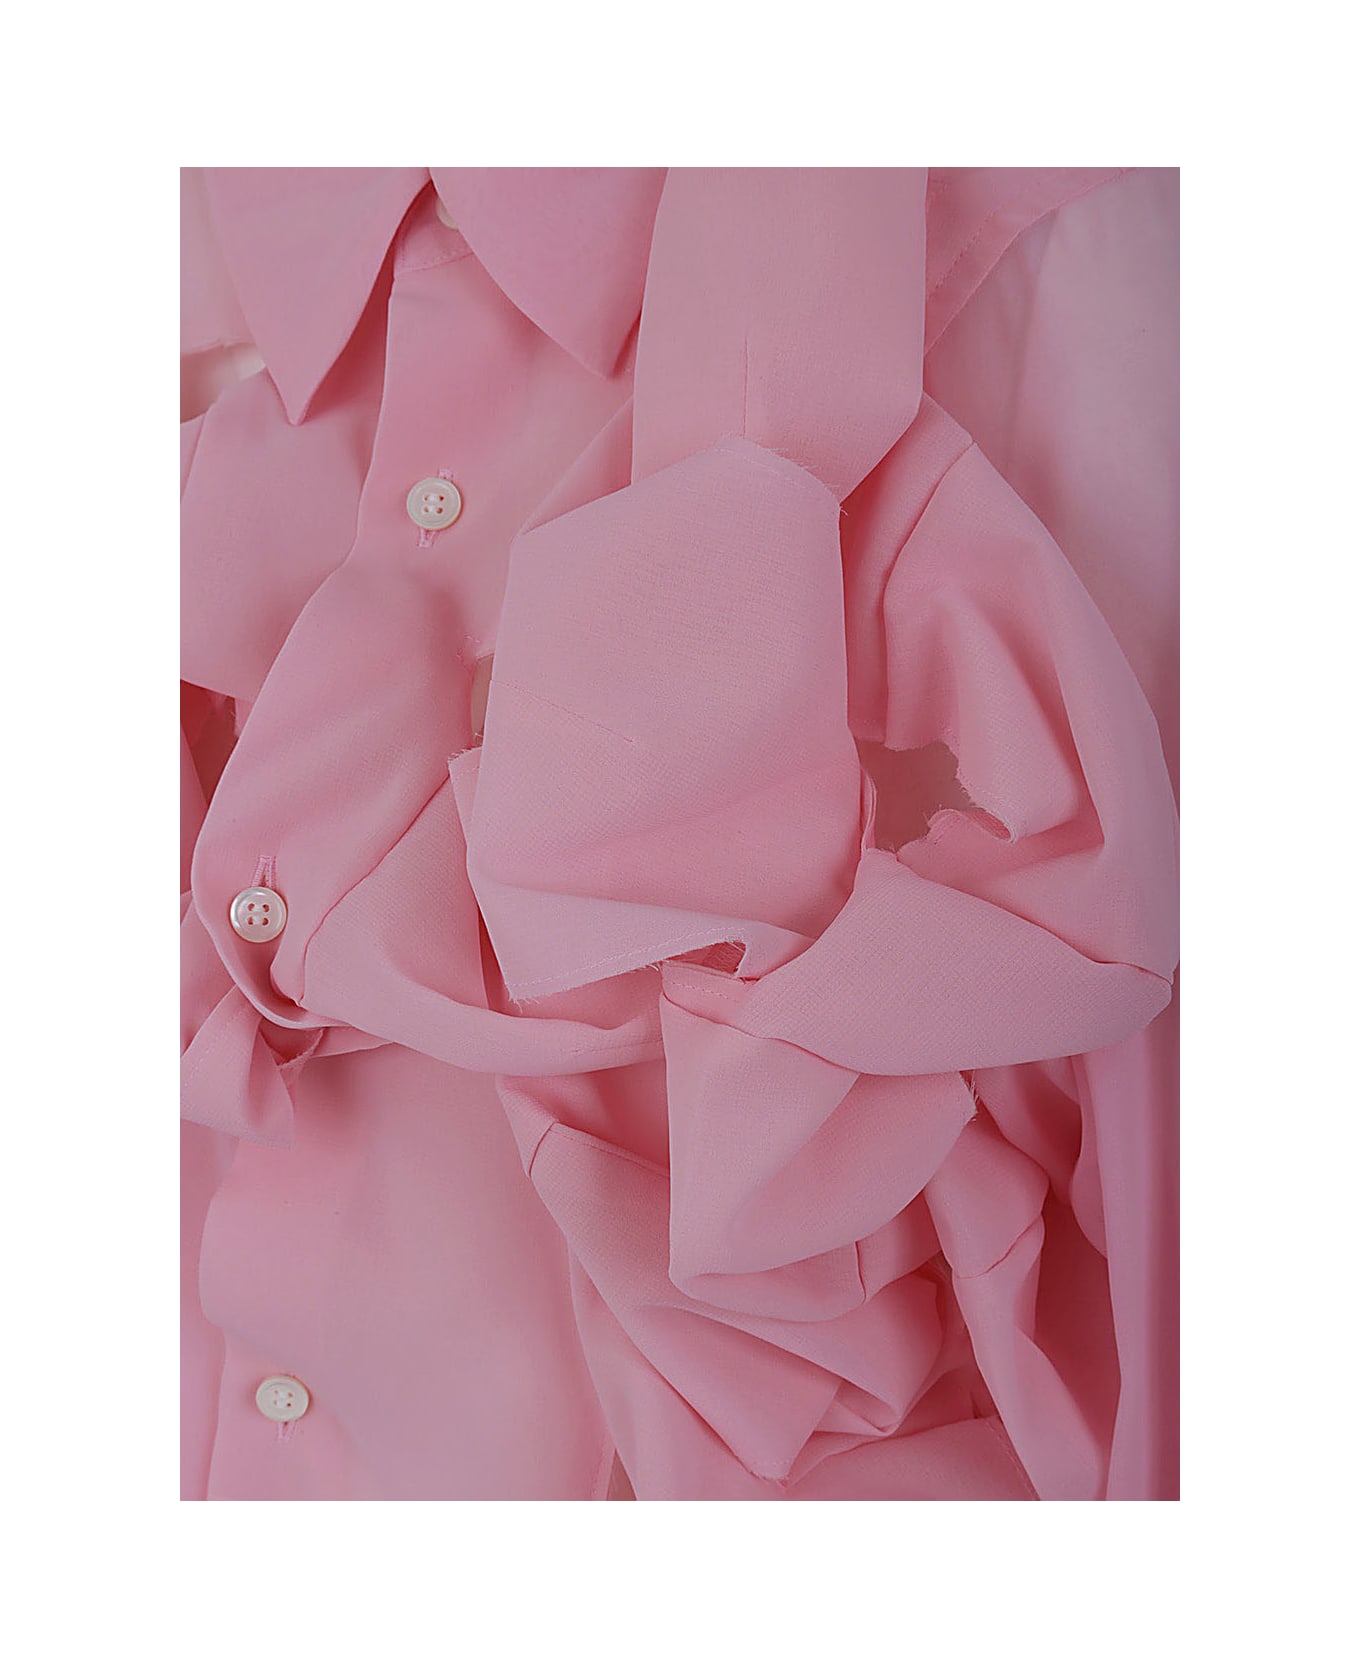 Comme des Garçons Shirt With Knot - Pink シャツ